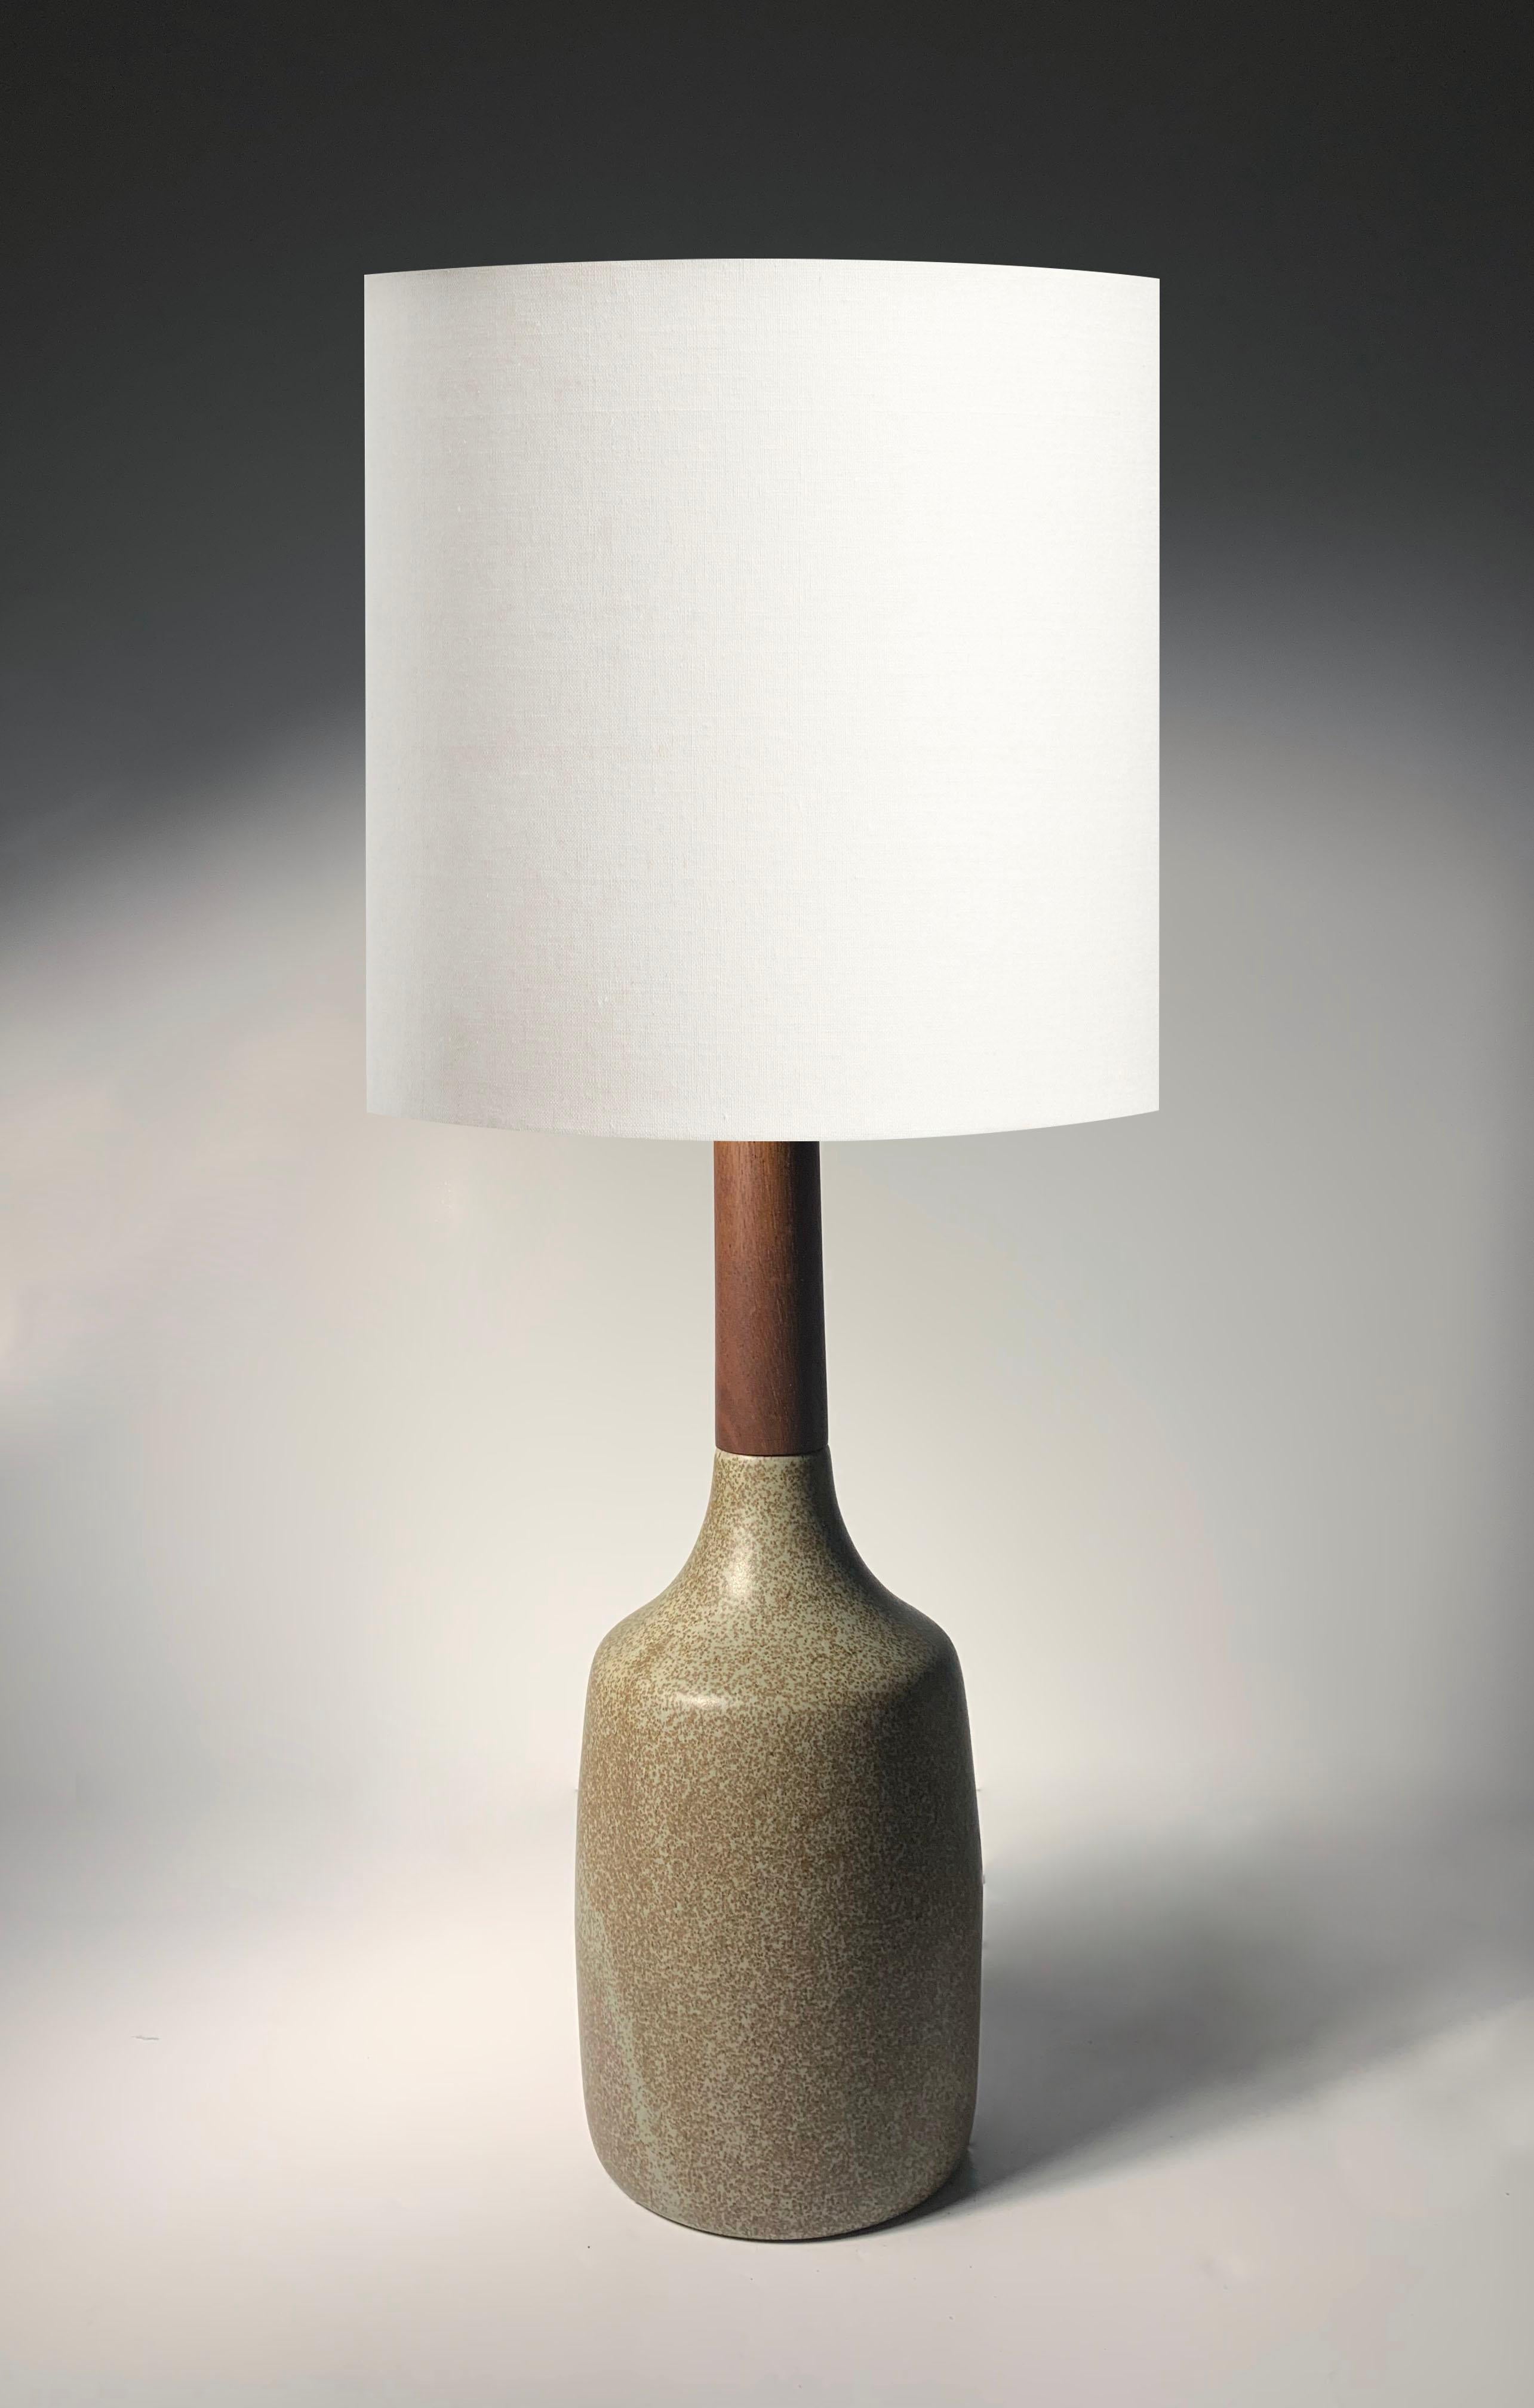 Gordon Martz Candlestick Ceramic and Wood table lamp Lamp

26.5